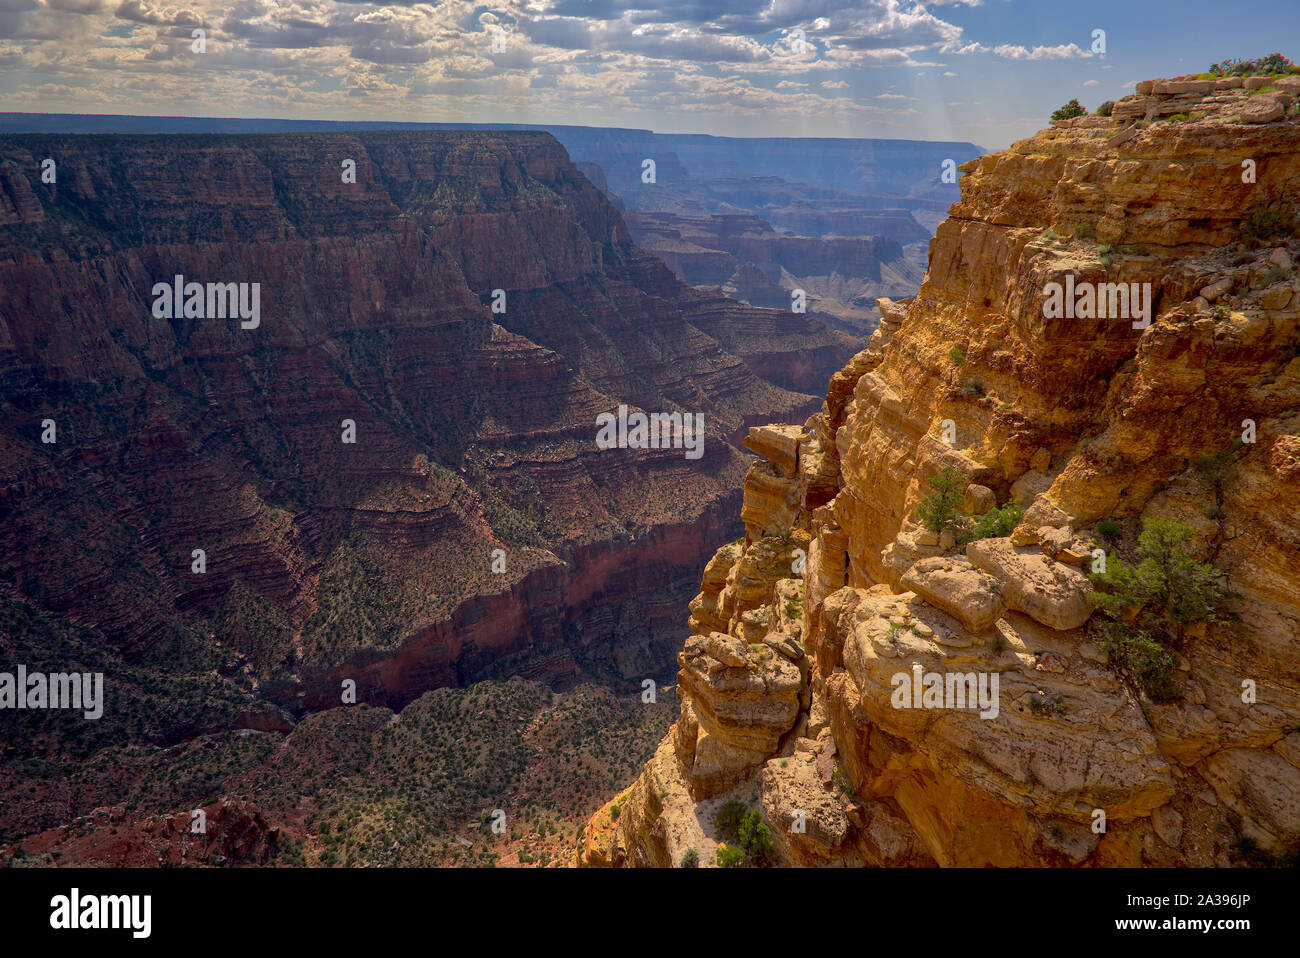 Grand Canyon view from Papago Point, Arizona, United States Stock Photo